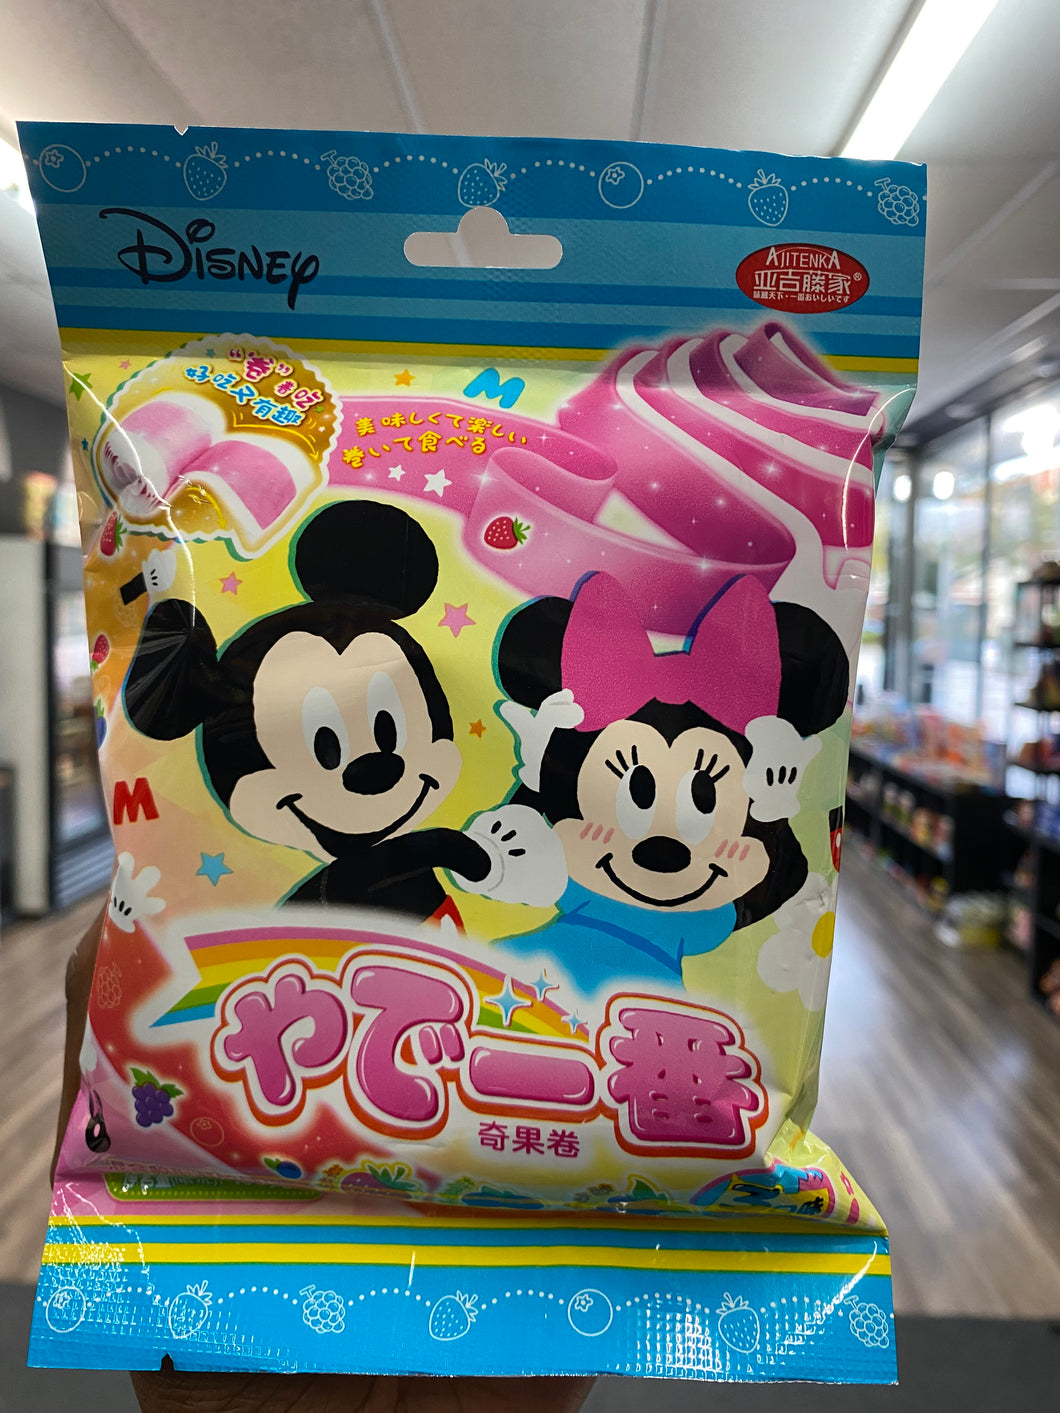 Disney Fruit Roll-Ups (Japan)